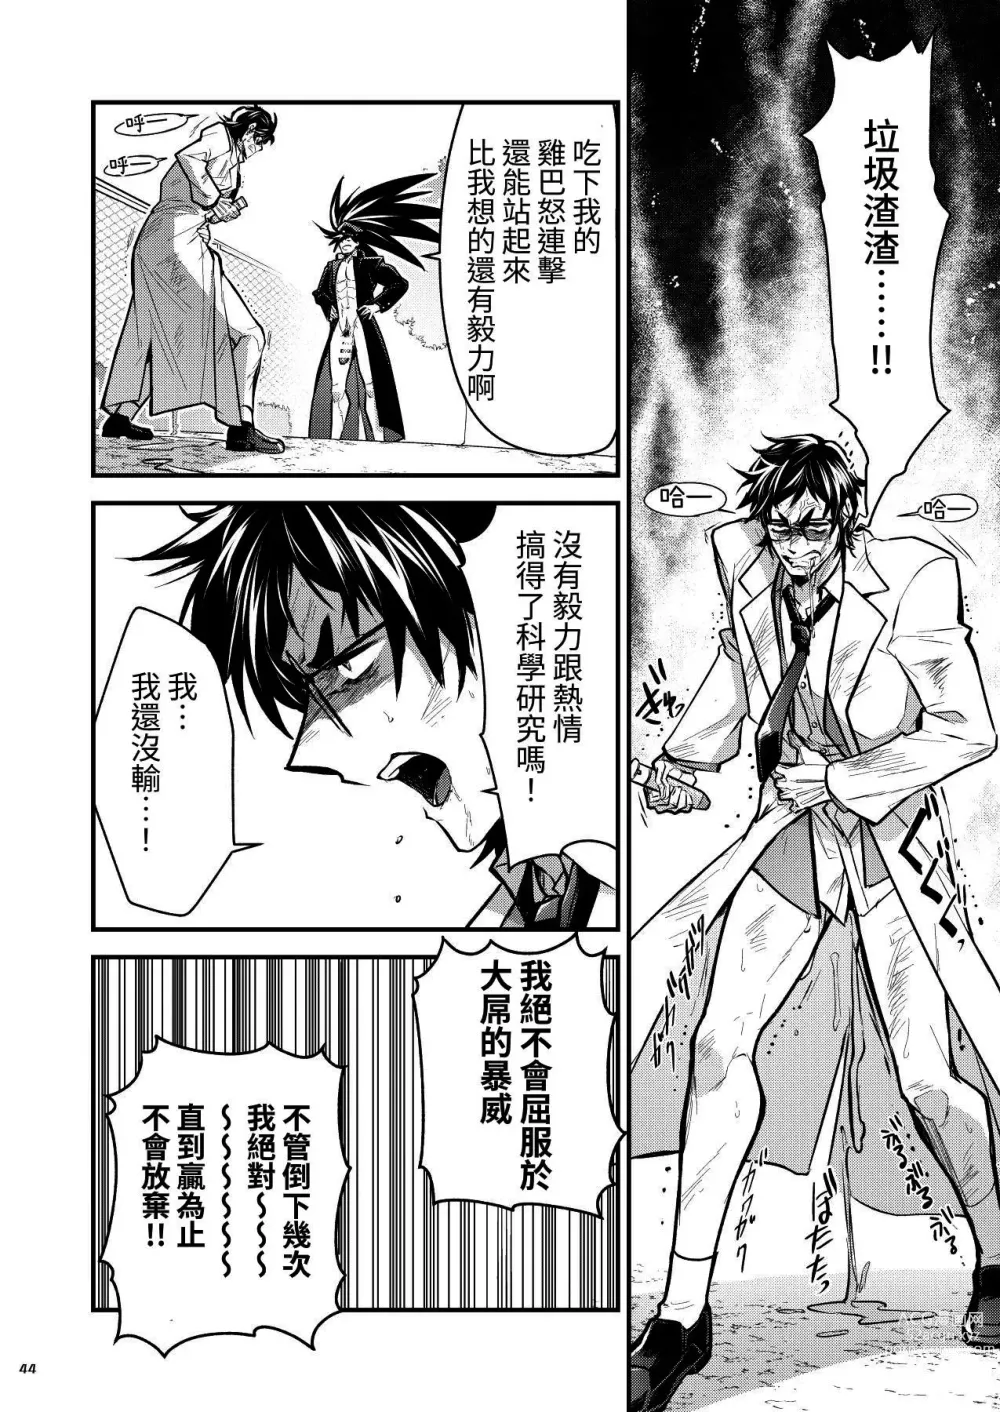 Page 44 of doujinshi Bancho★Monogatari 3